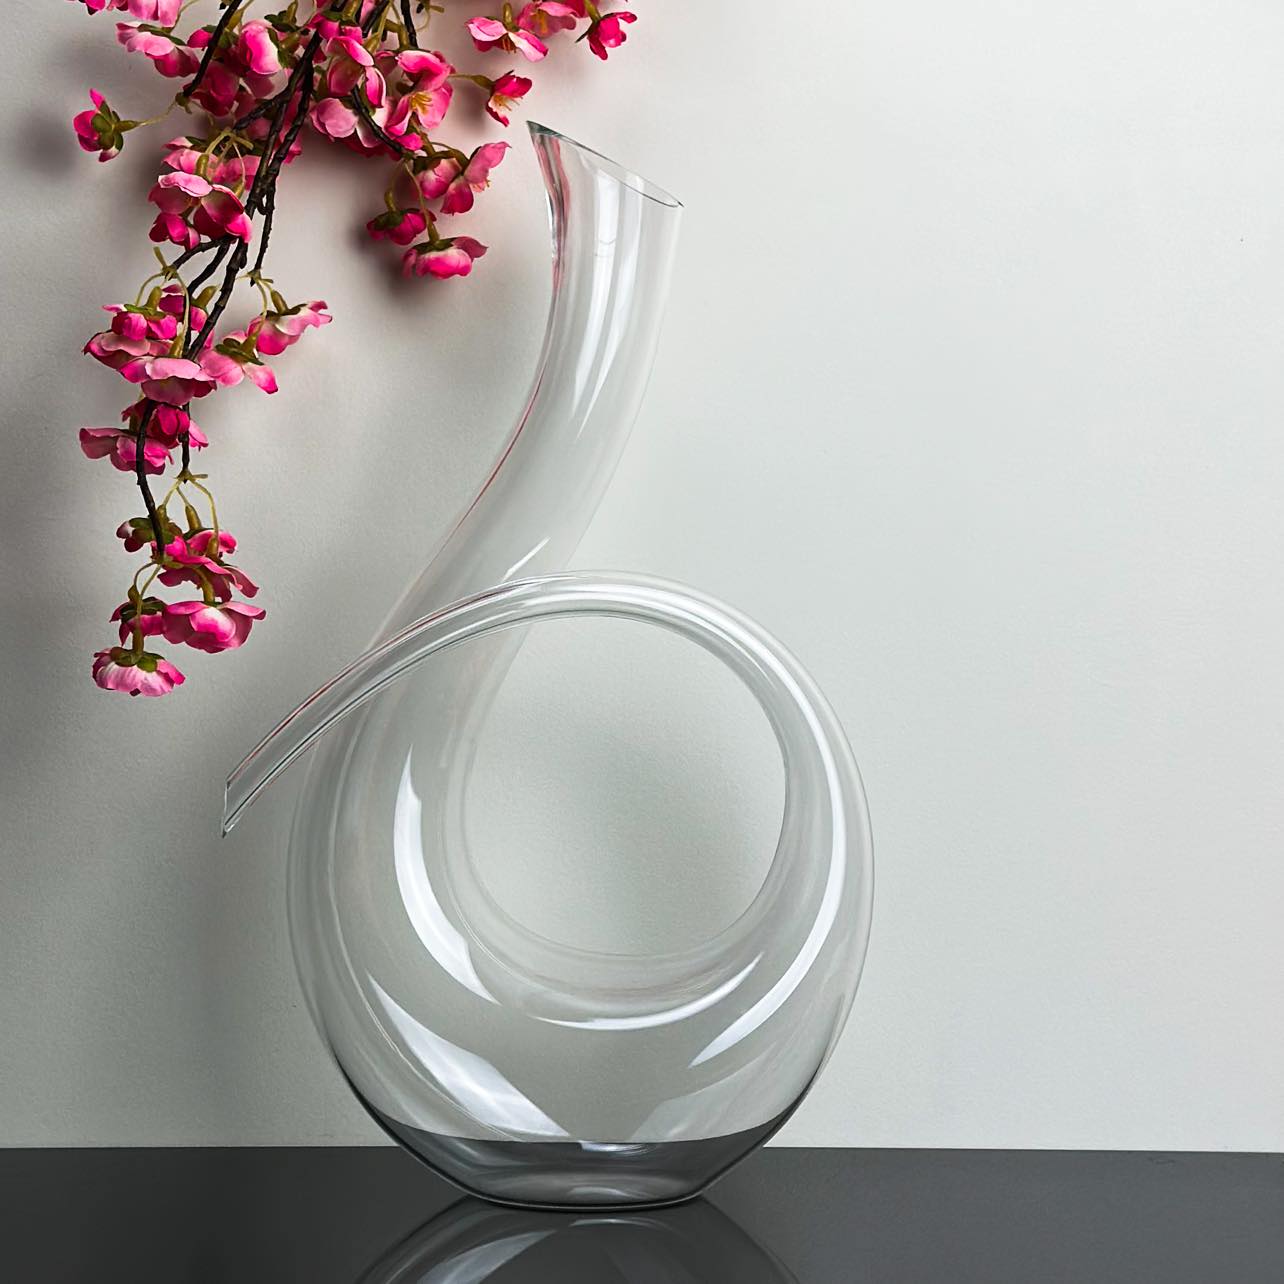 The Airlie Glass Wine Decanter - Solkatt Designs 